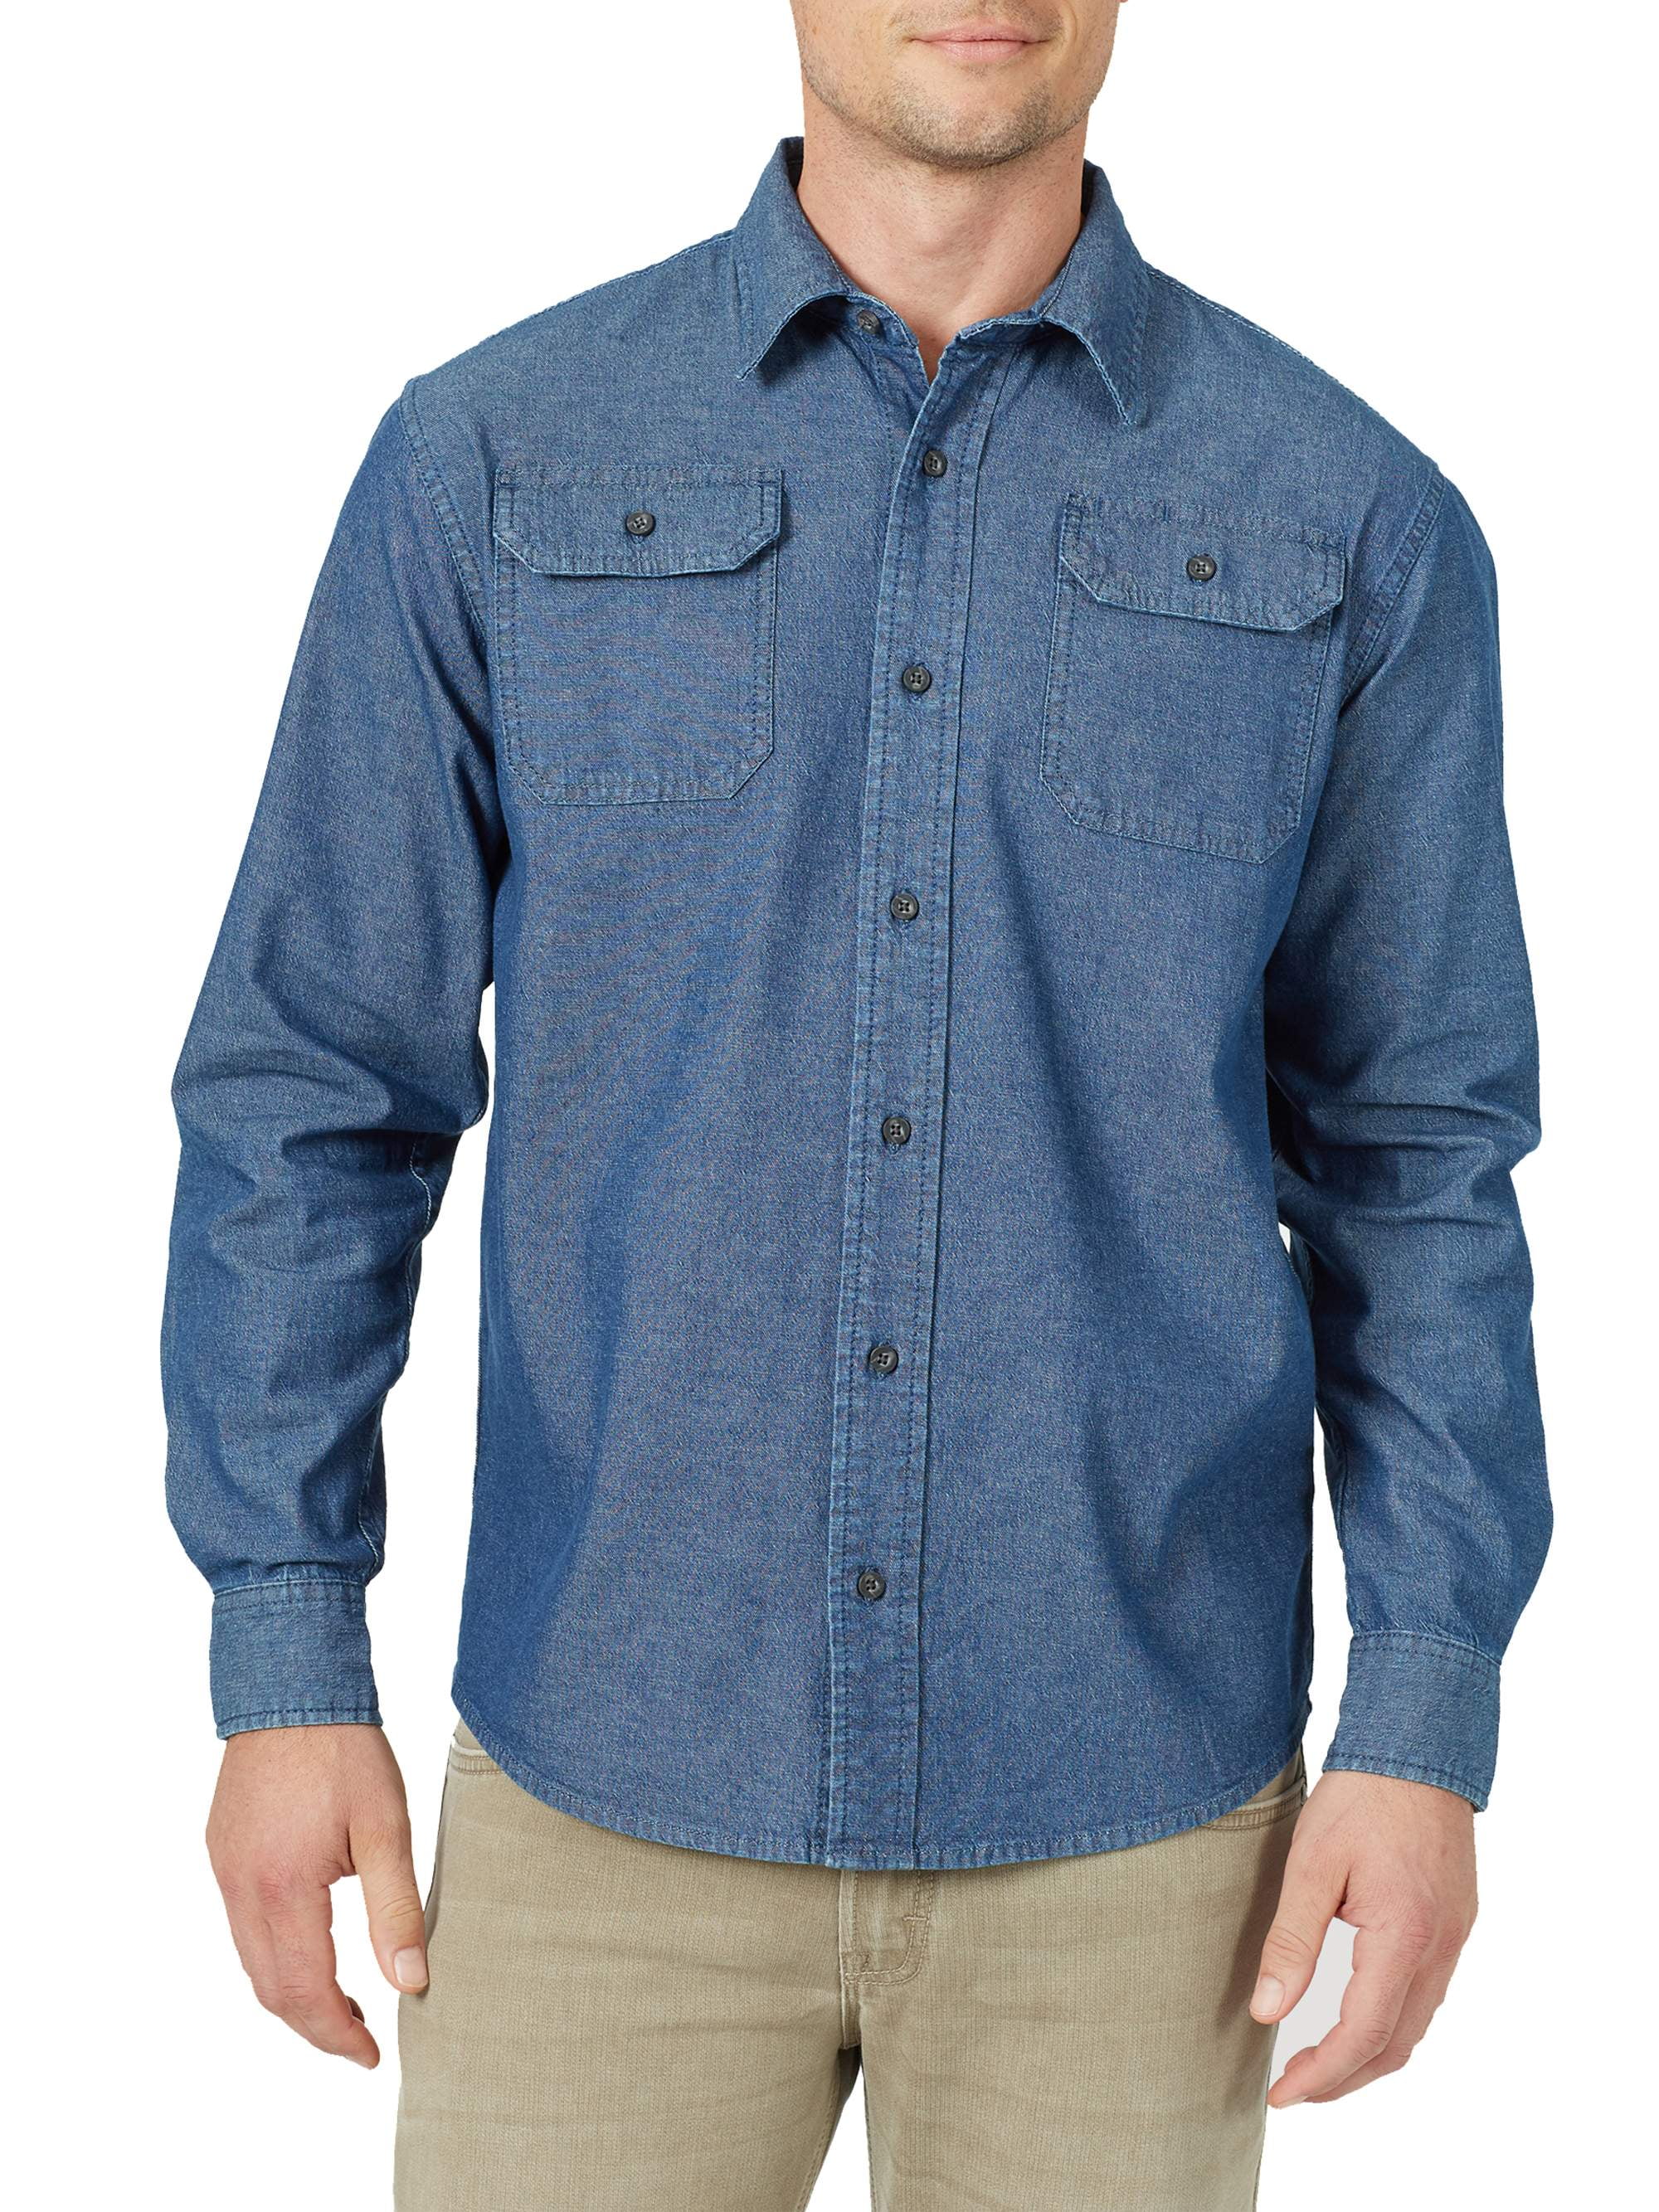 Wrangler Men's Long Sleeve Denim Shirt - Walmart.com